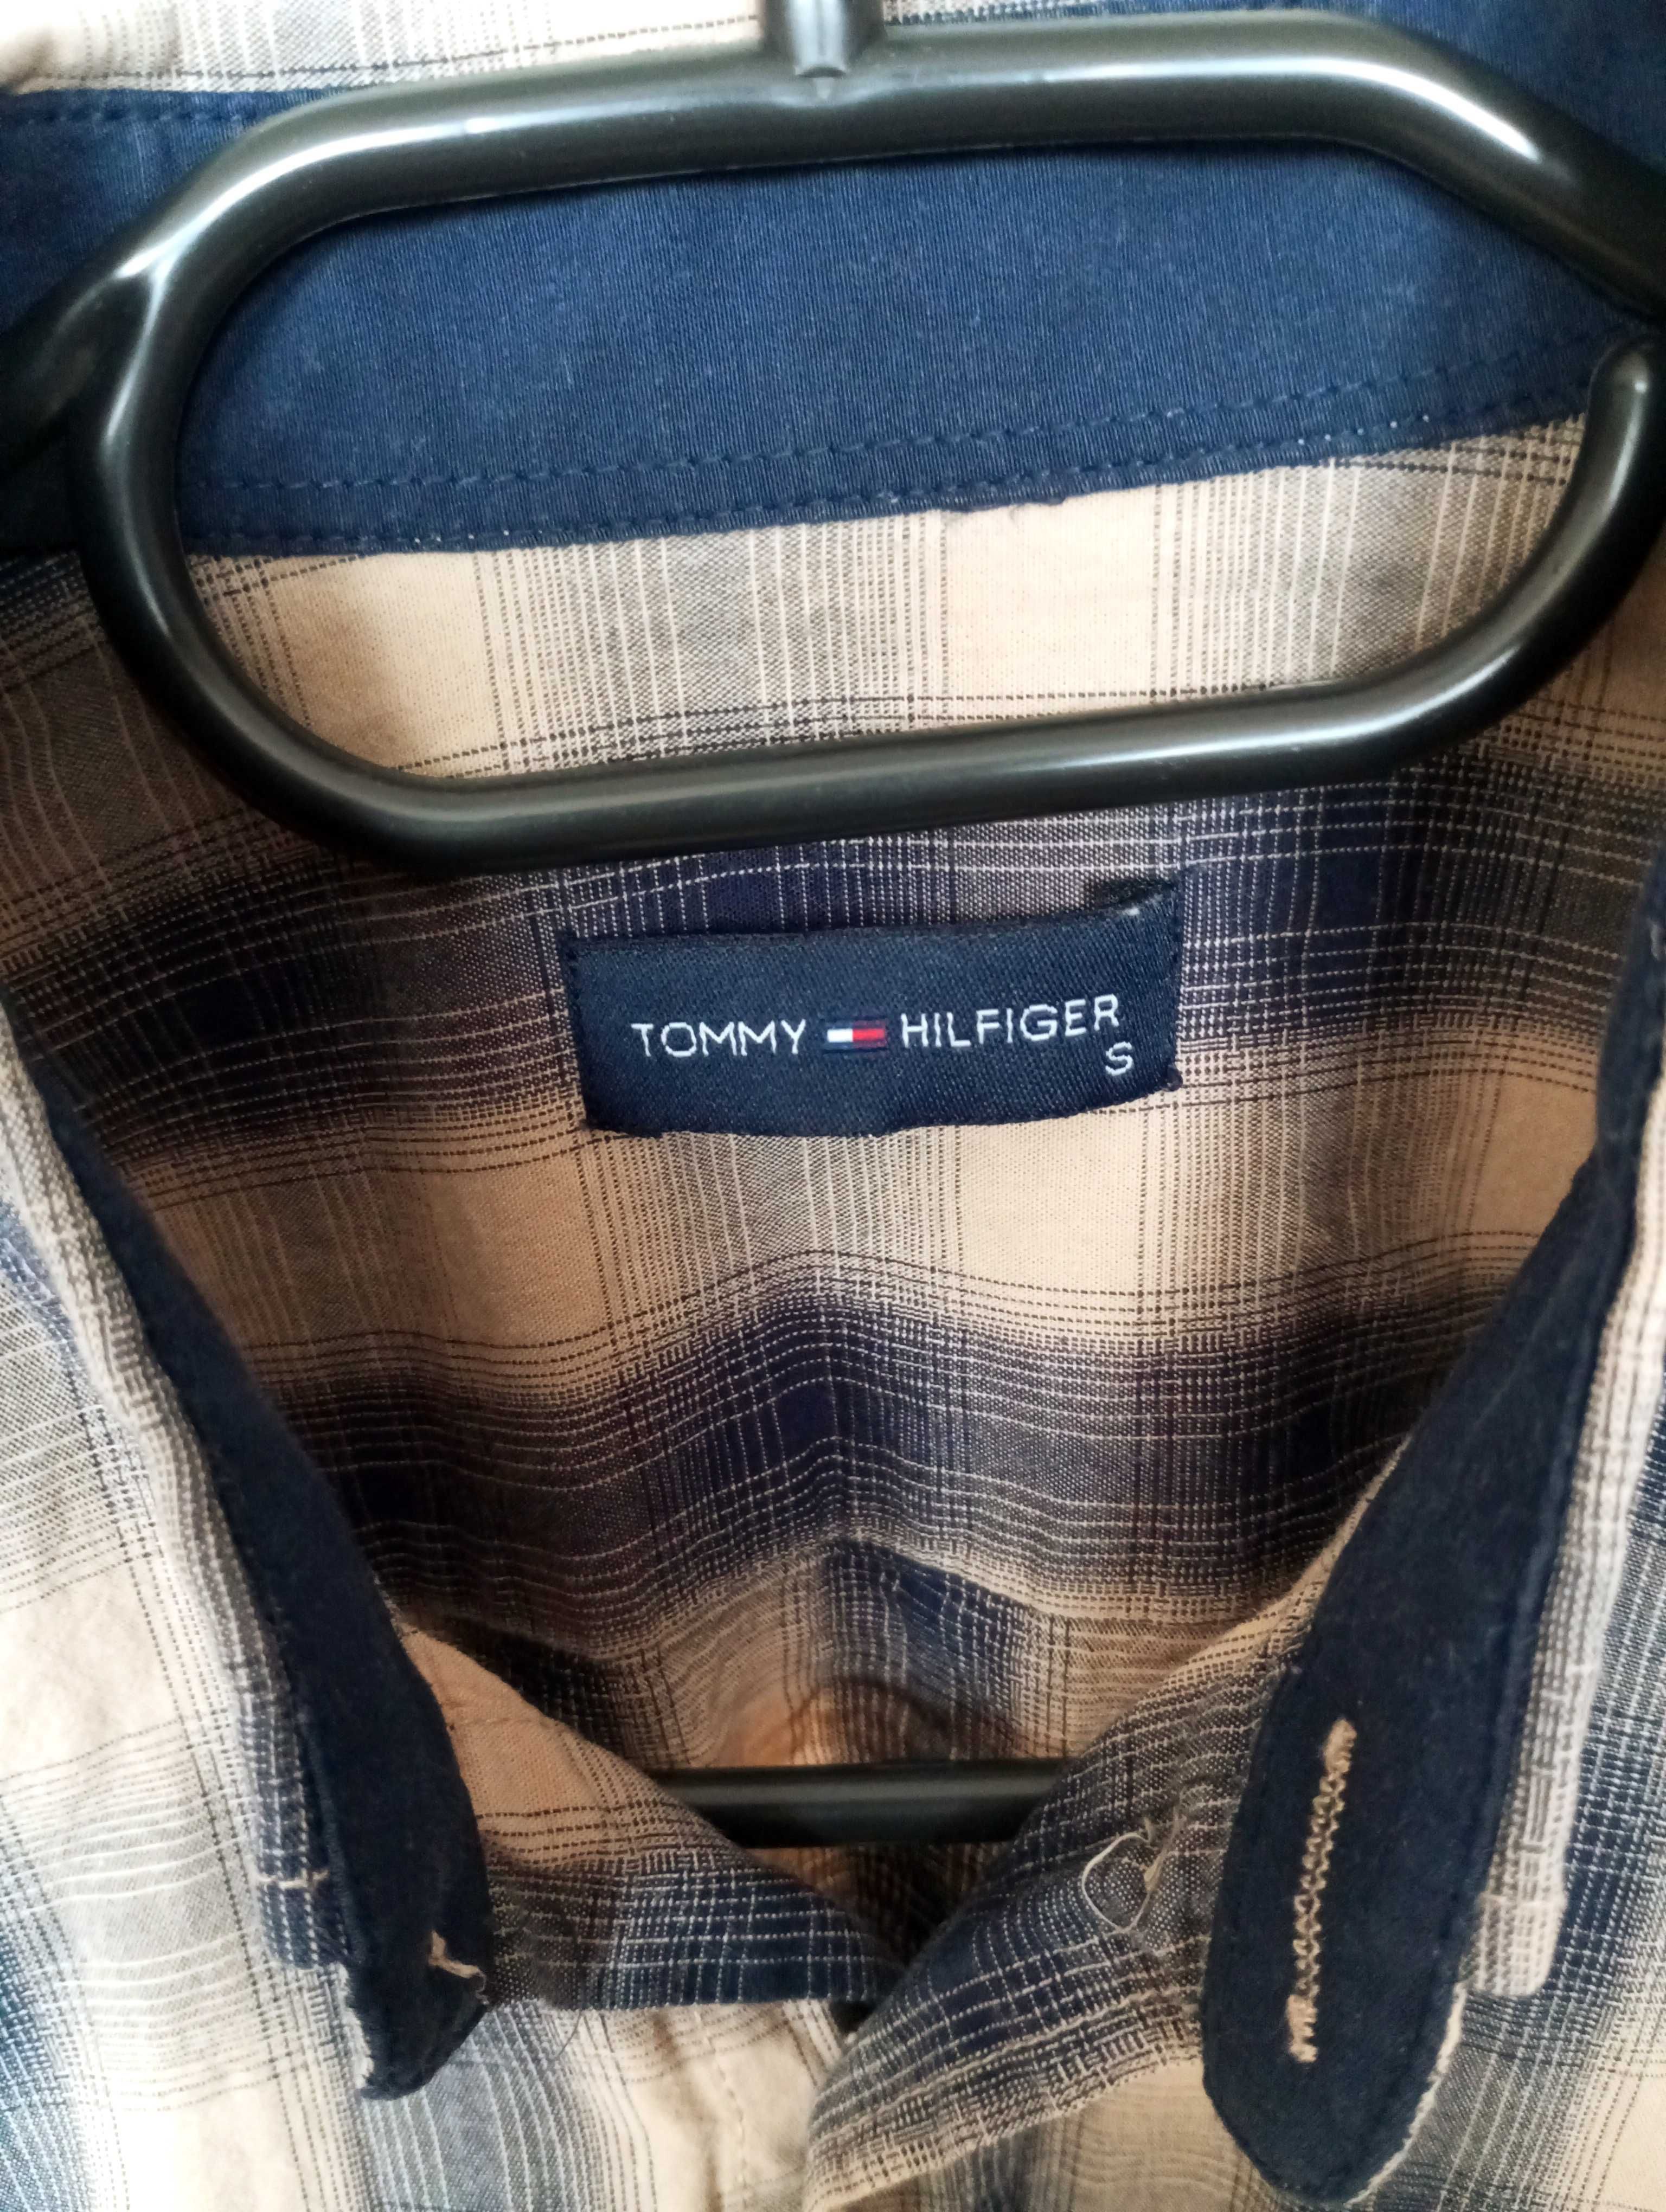 Koszula męska Tommy Hilfiger rozmiar S typu slim fit